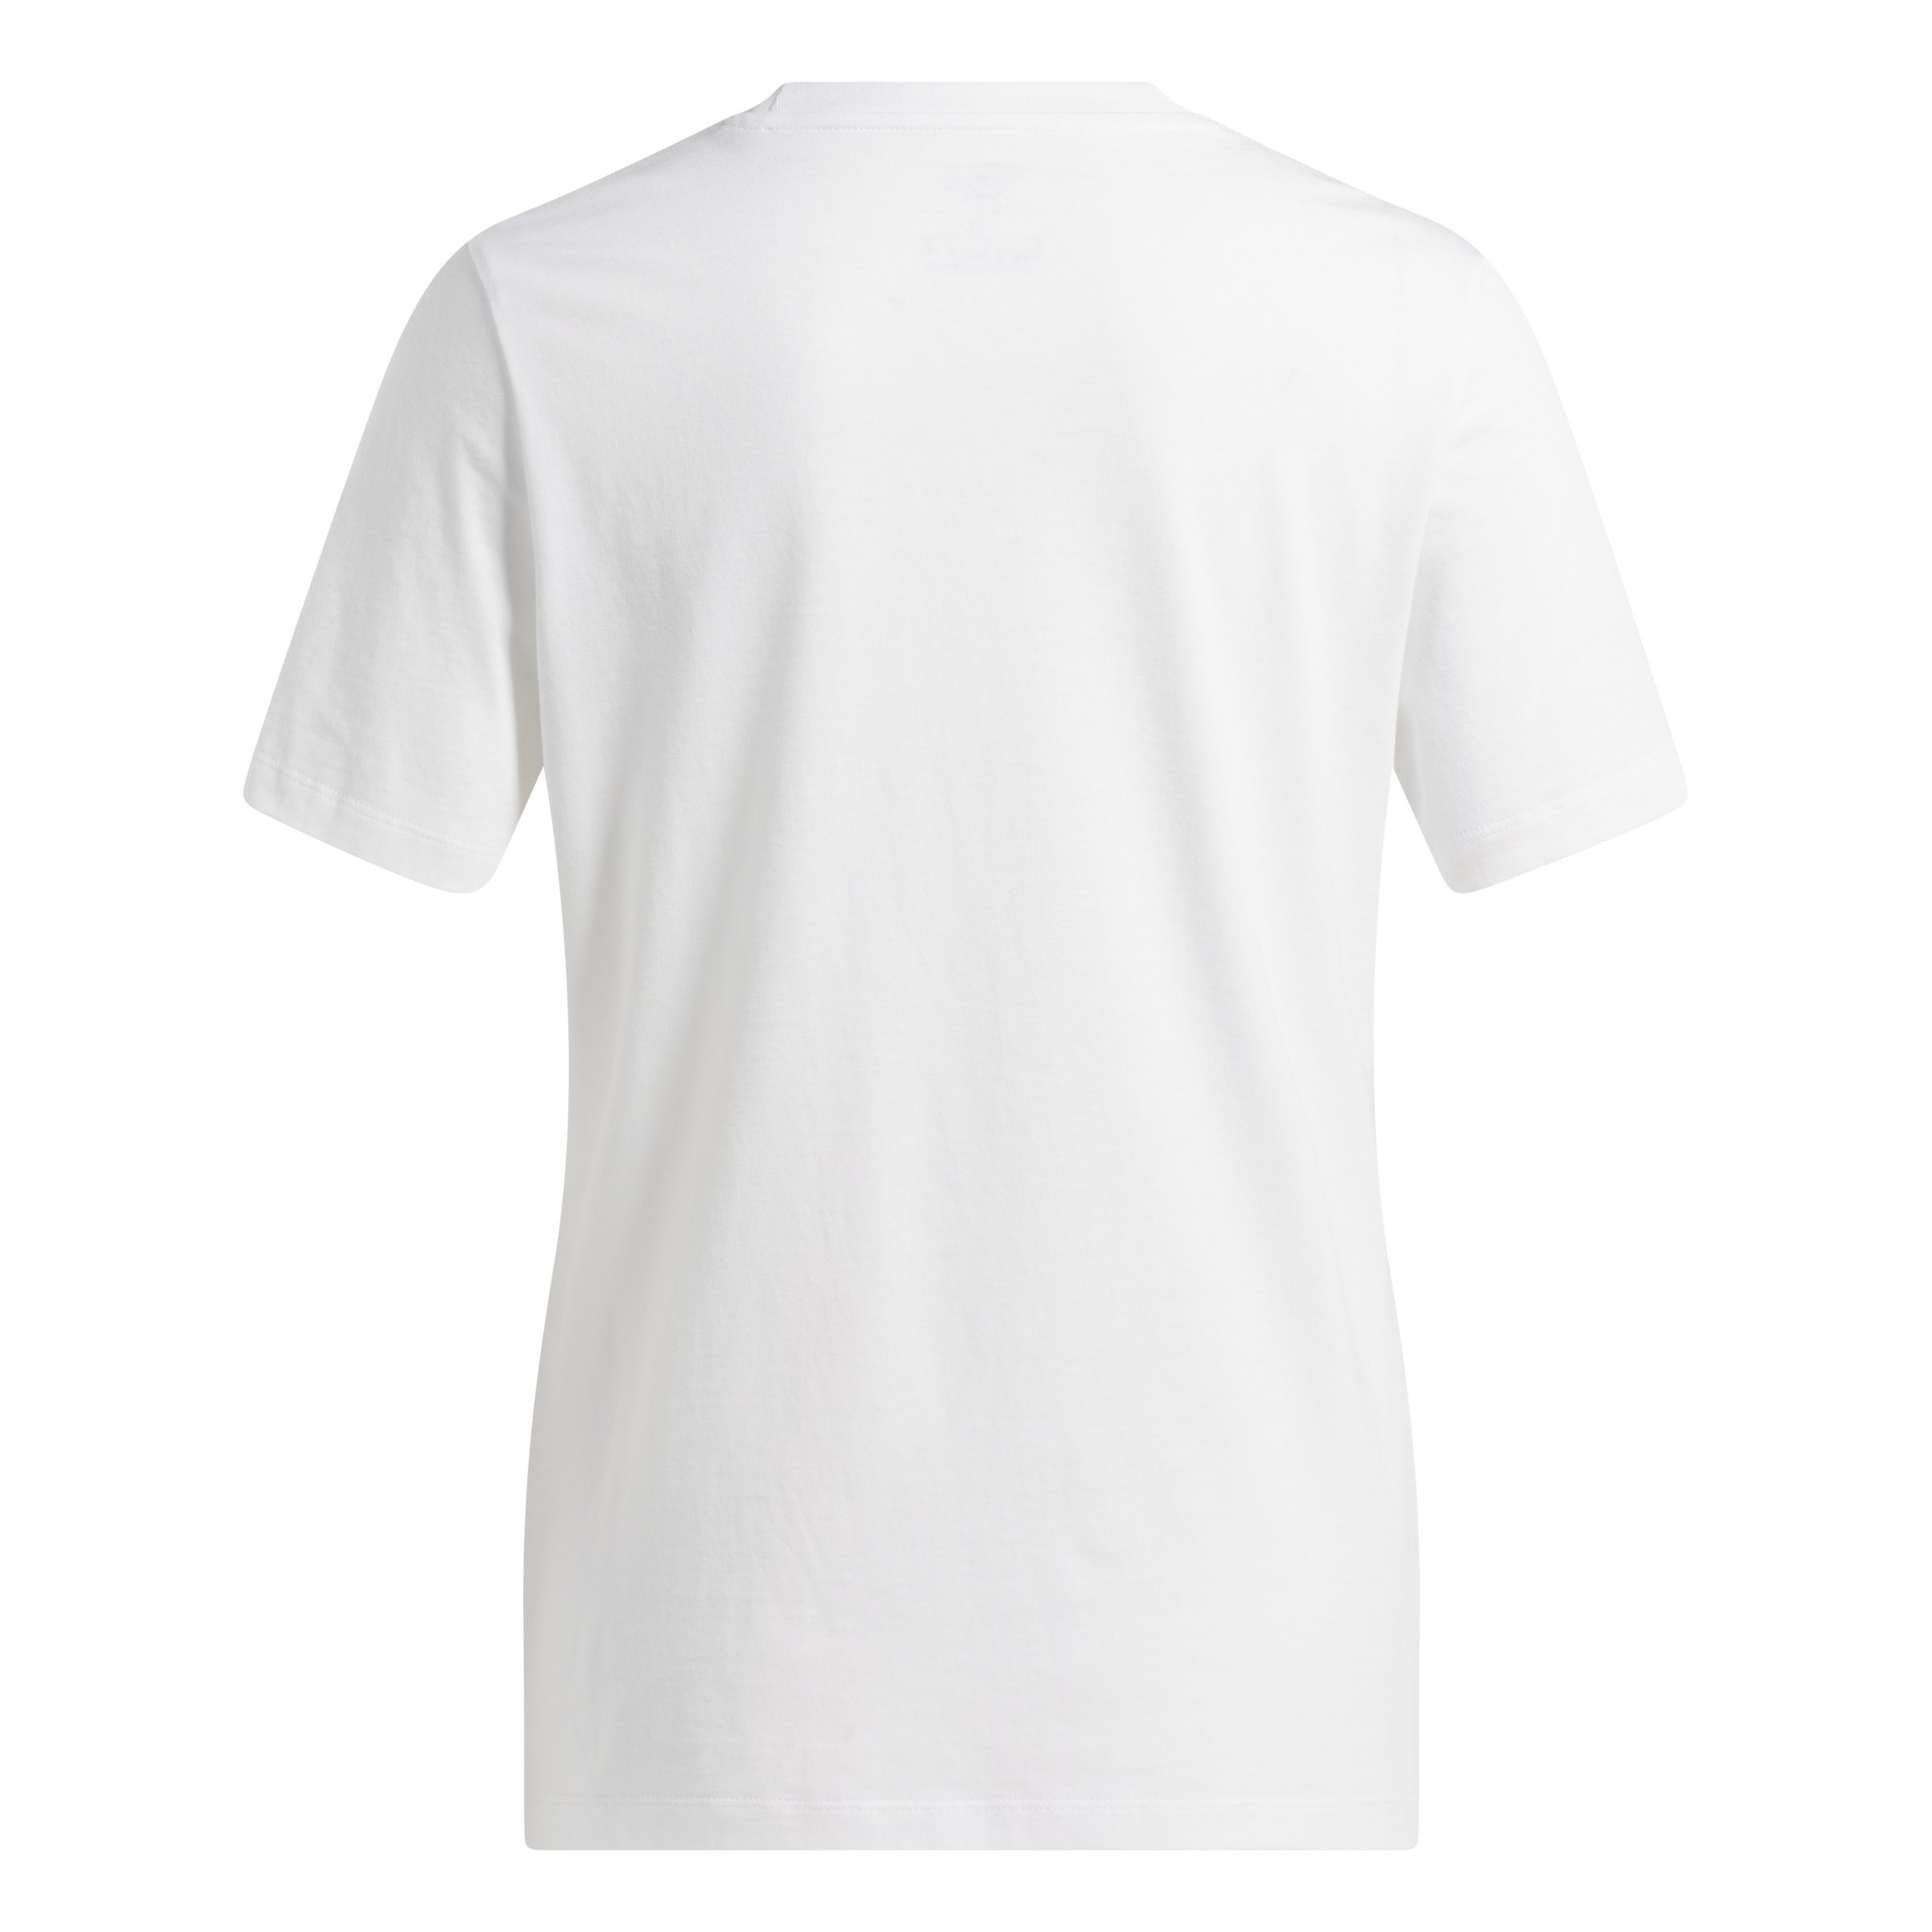 Reebok T-Shirt RI BL Tee white